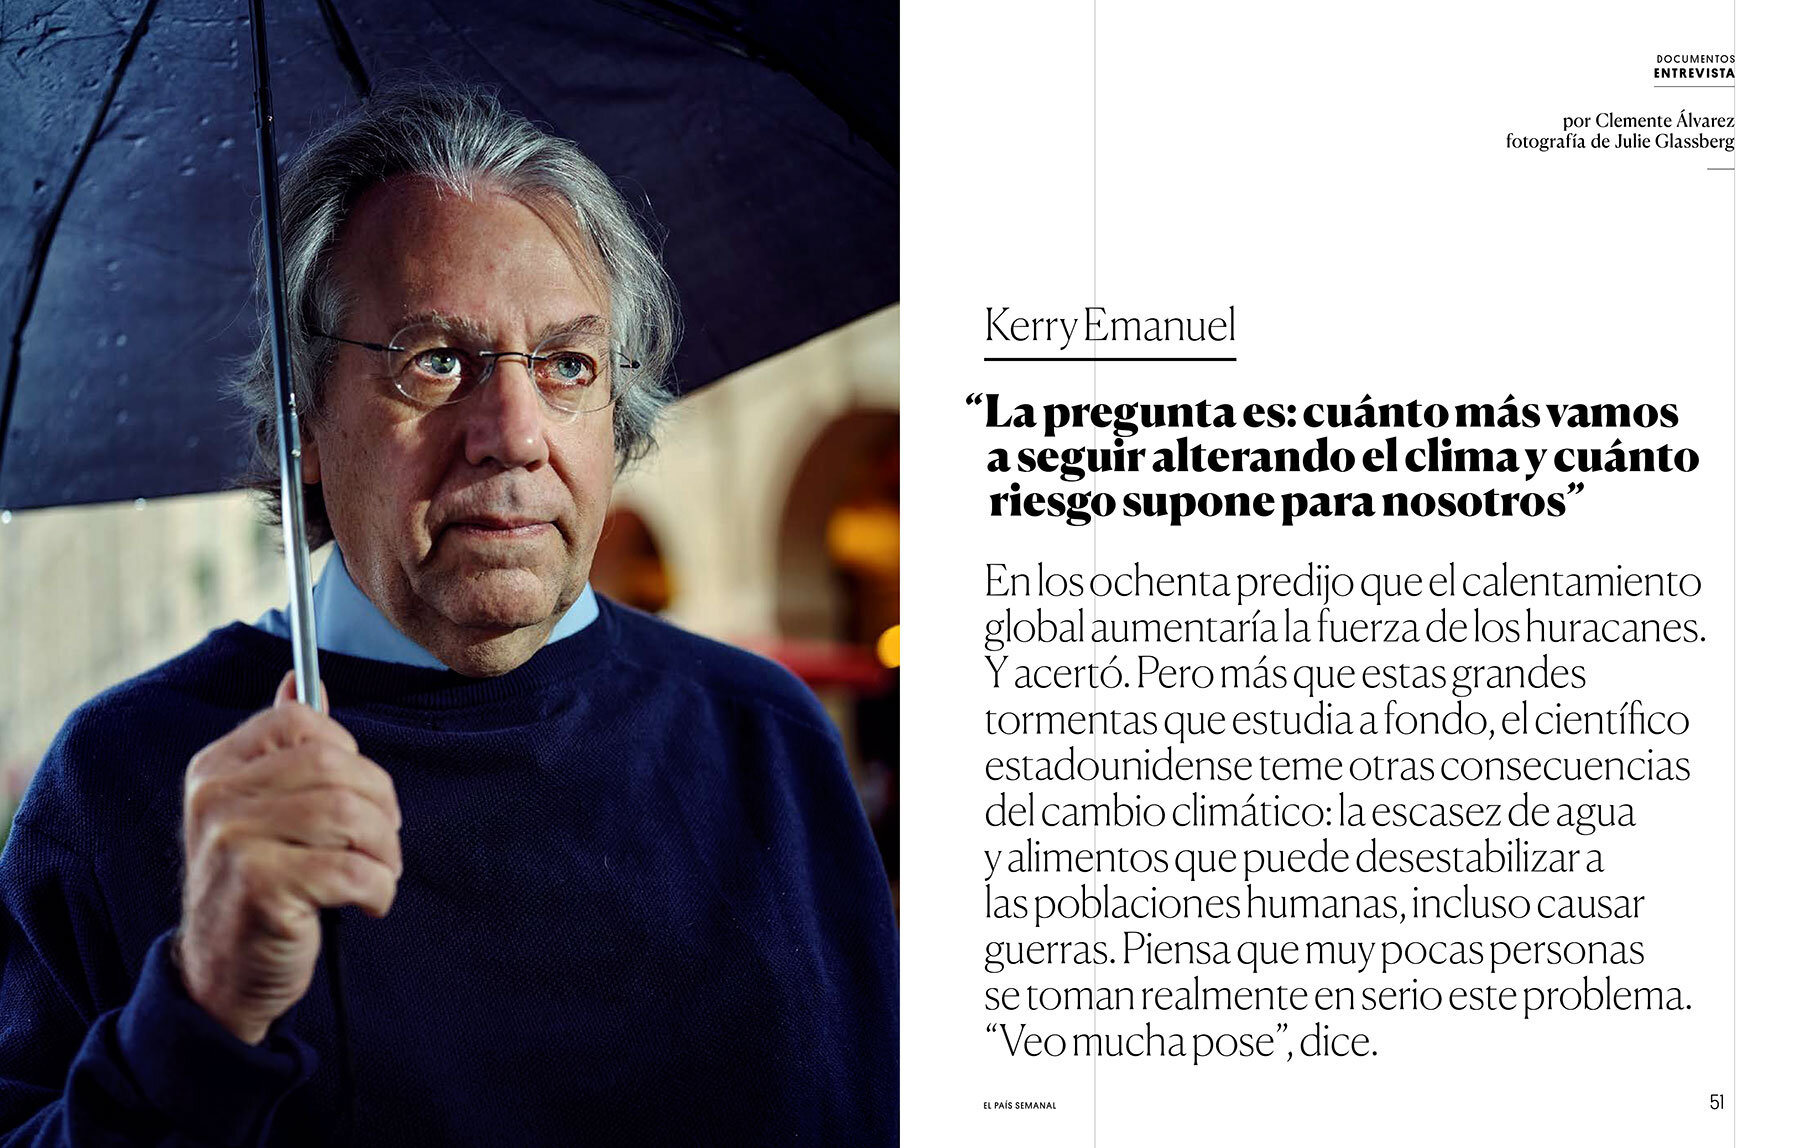 Kerry Emanuel for El País Semanal